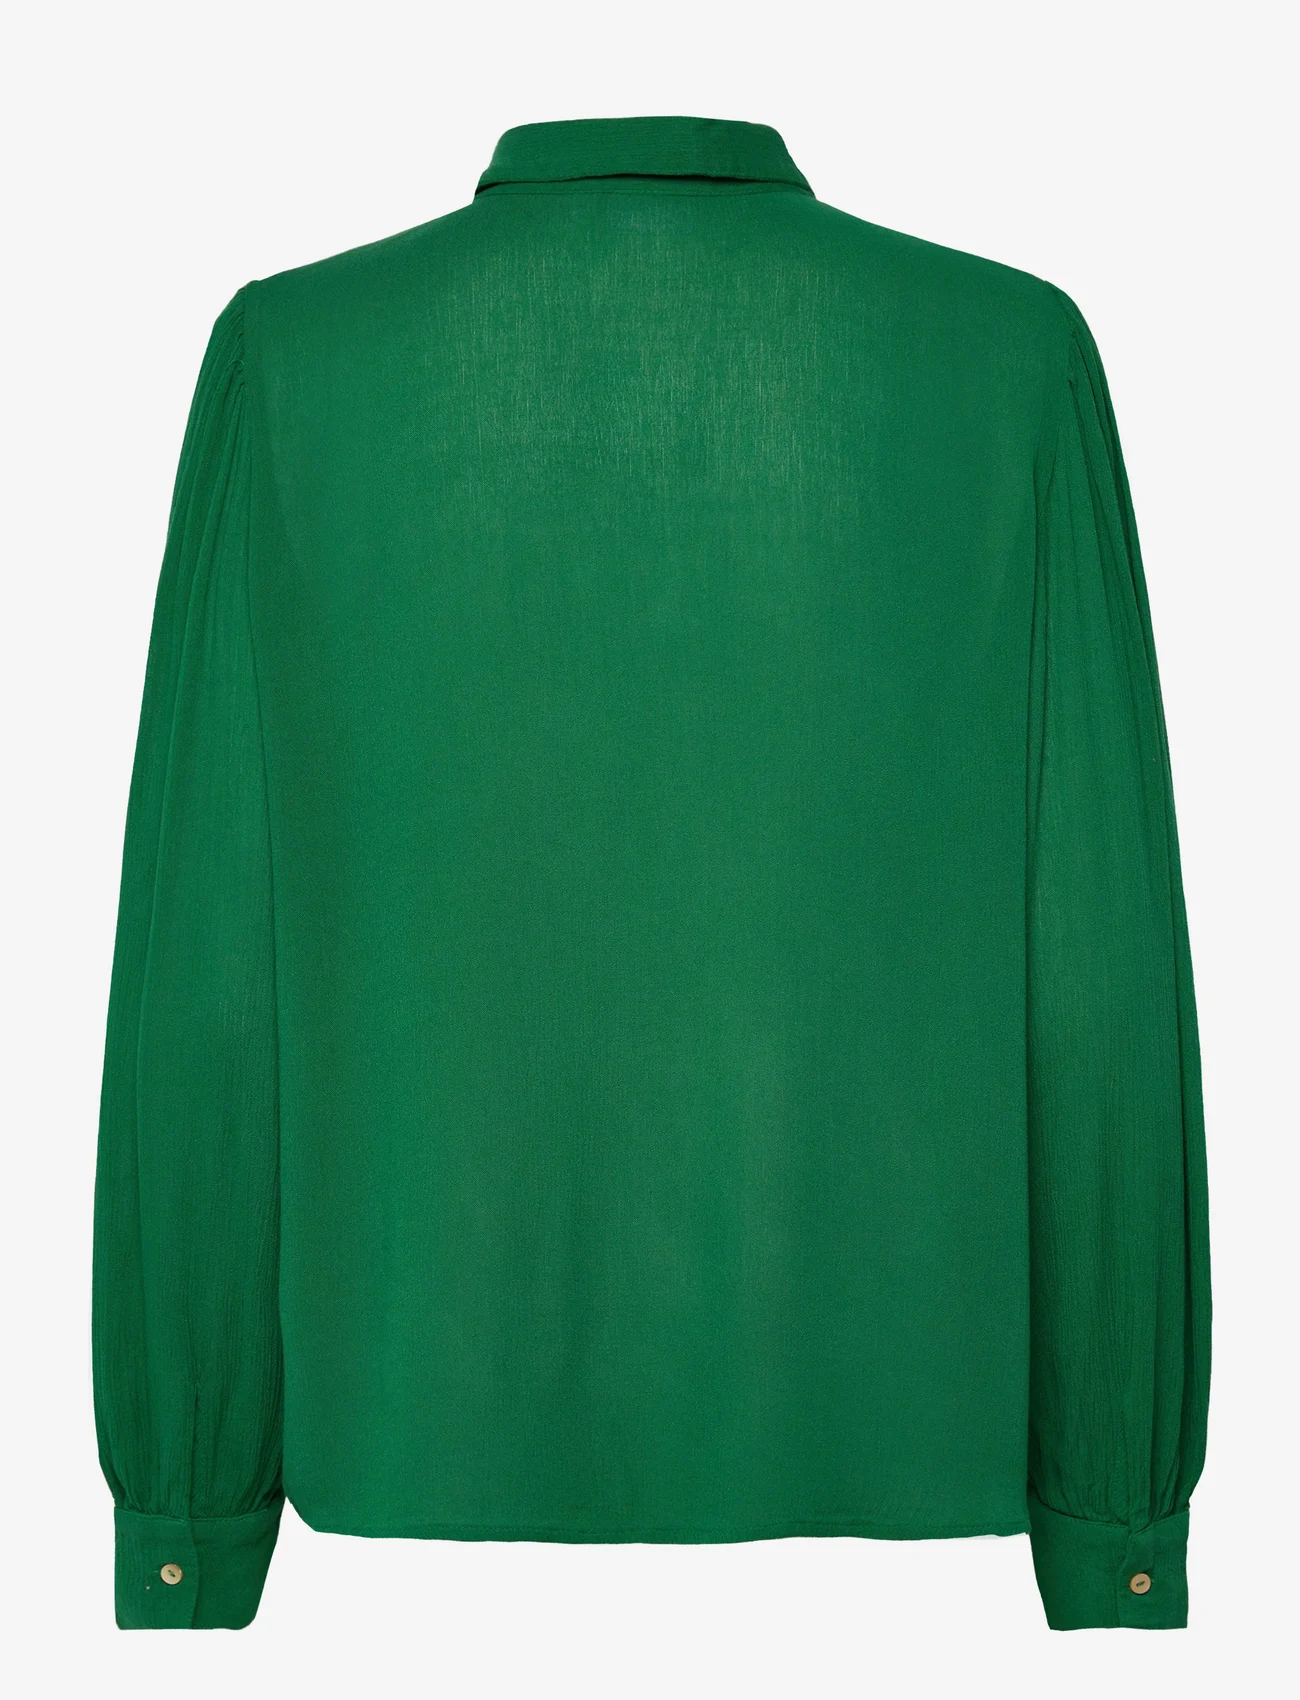 Saint Tropez - AlbaSZ Shirt - langærmede skjorter - verdant green - 1